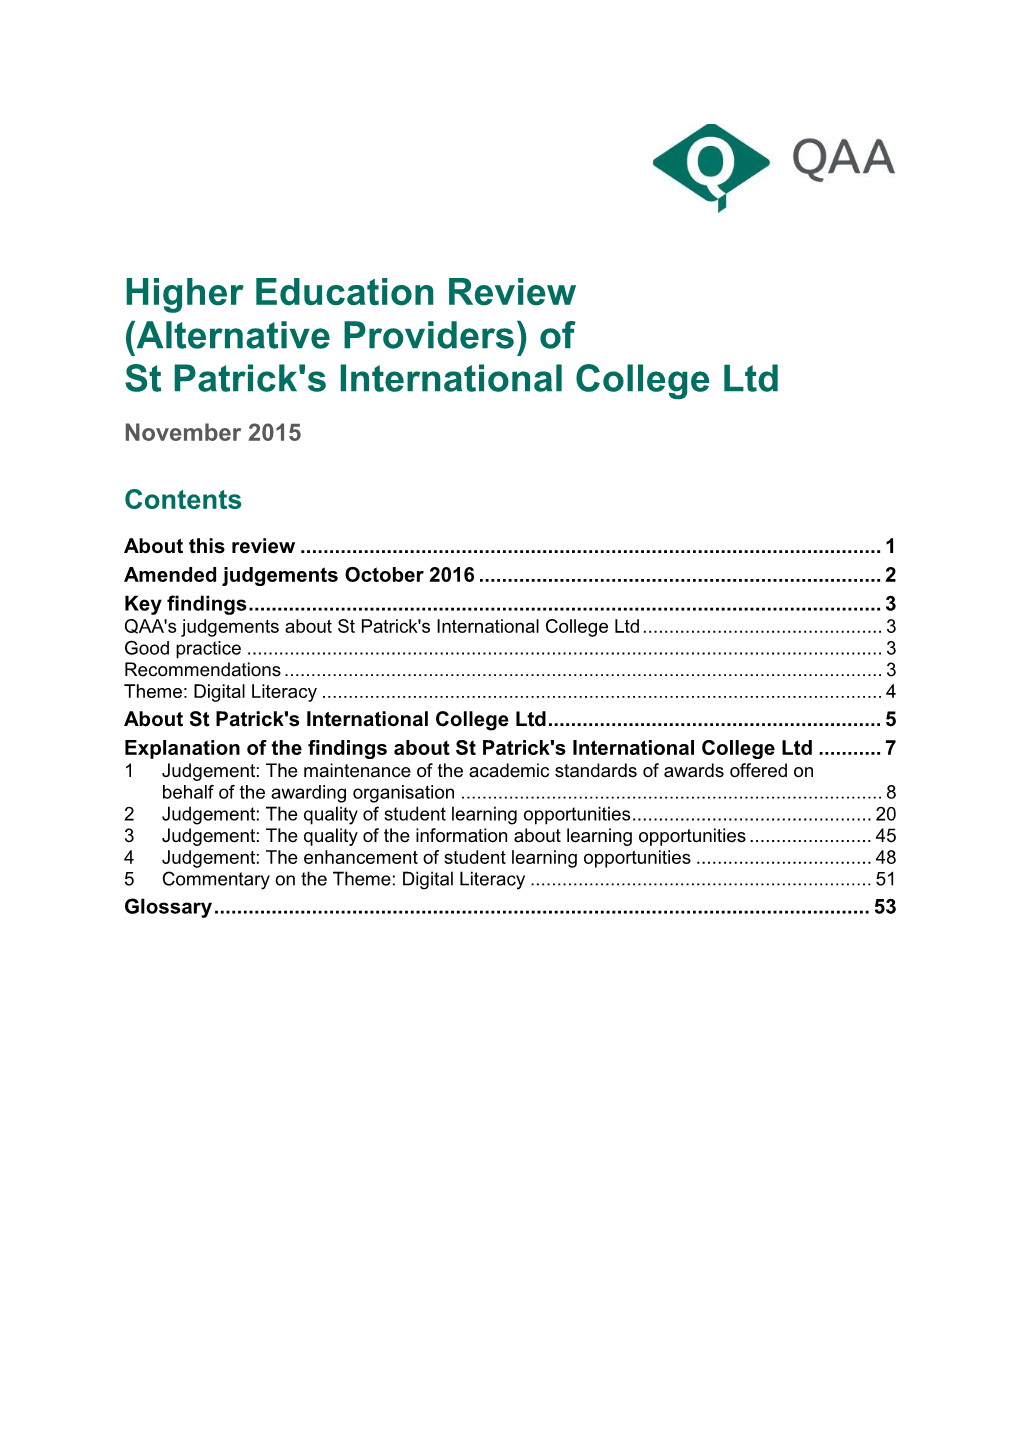 St Patrick's International College Ltd, November 2015